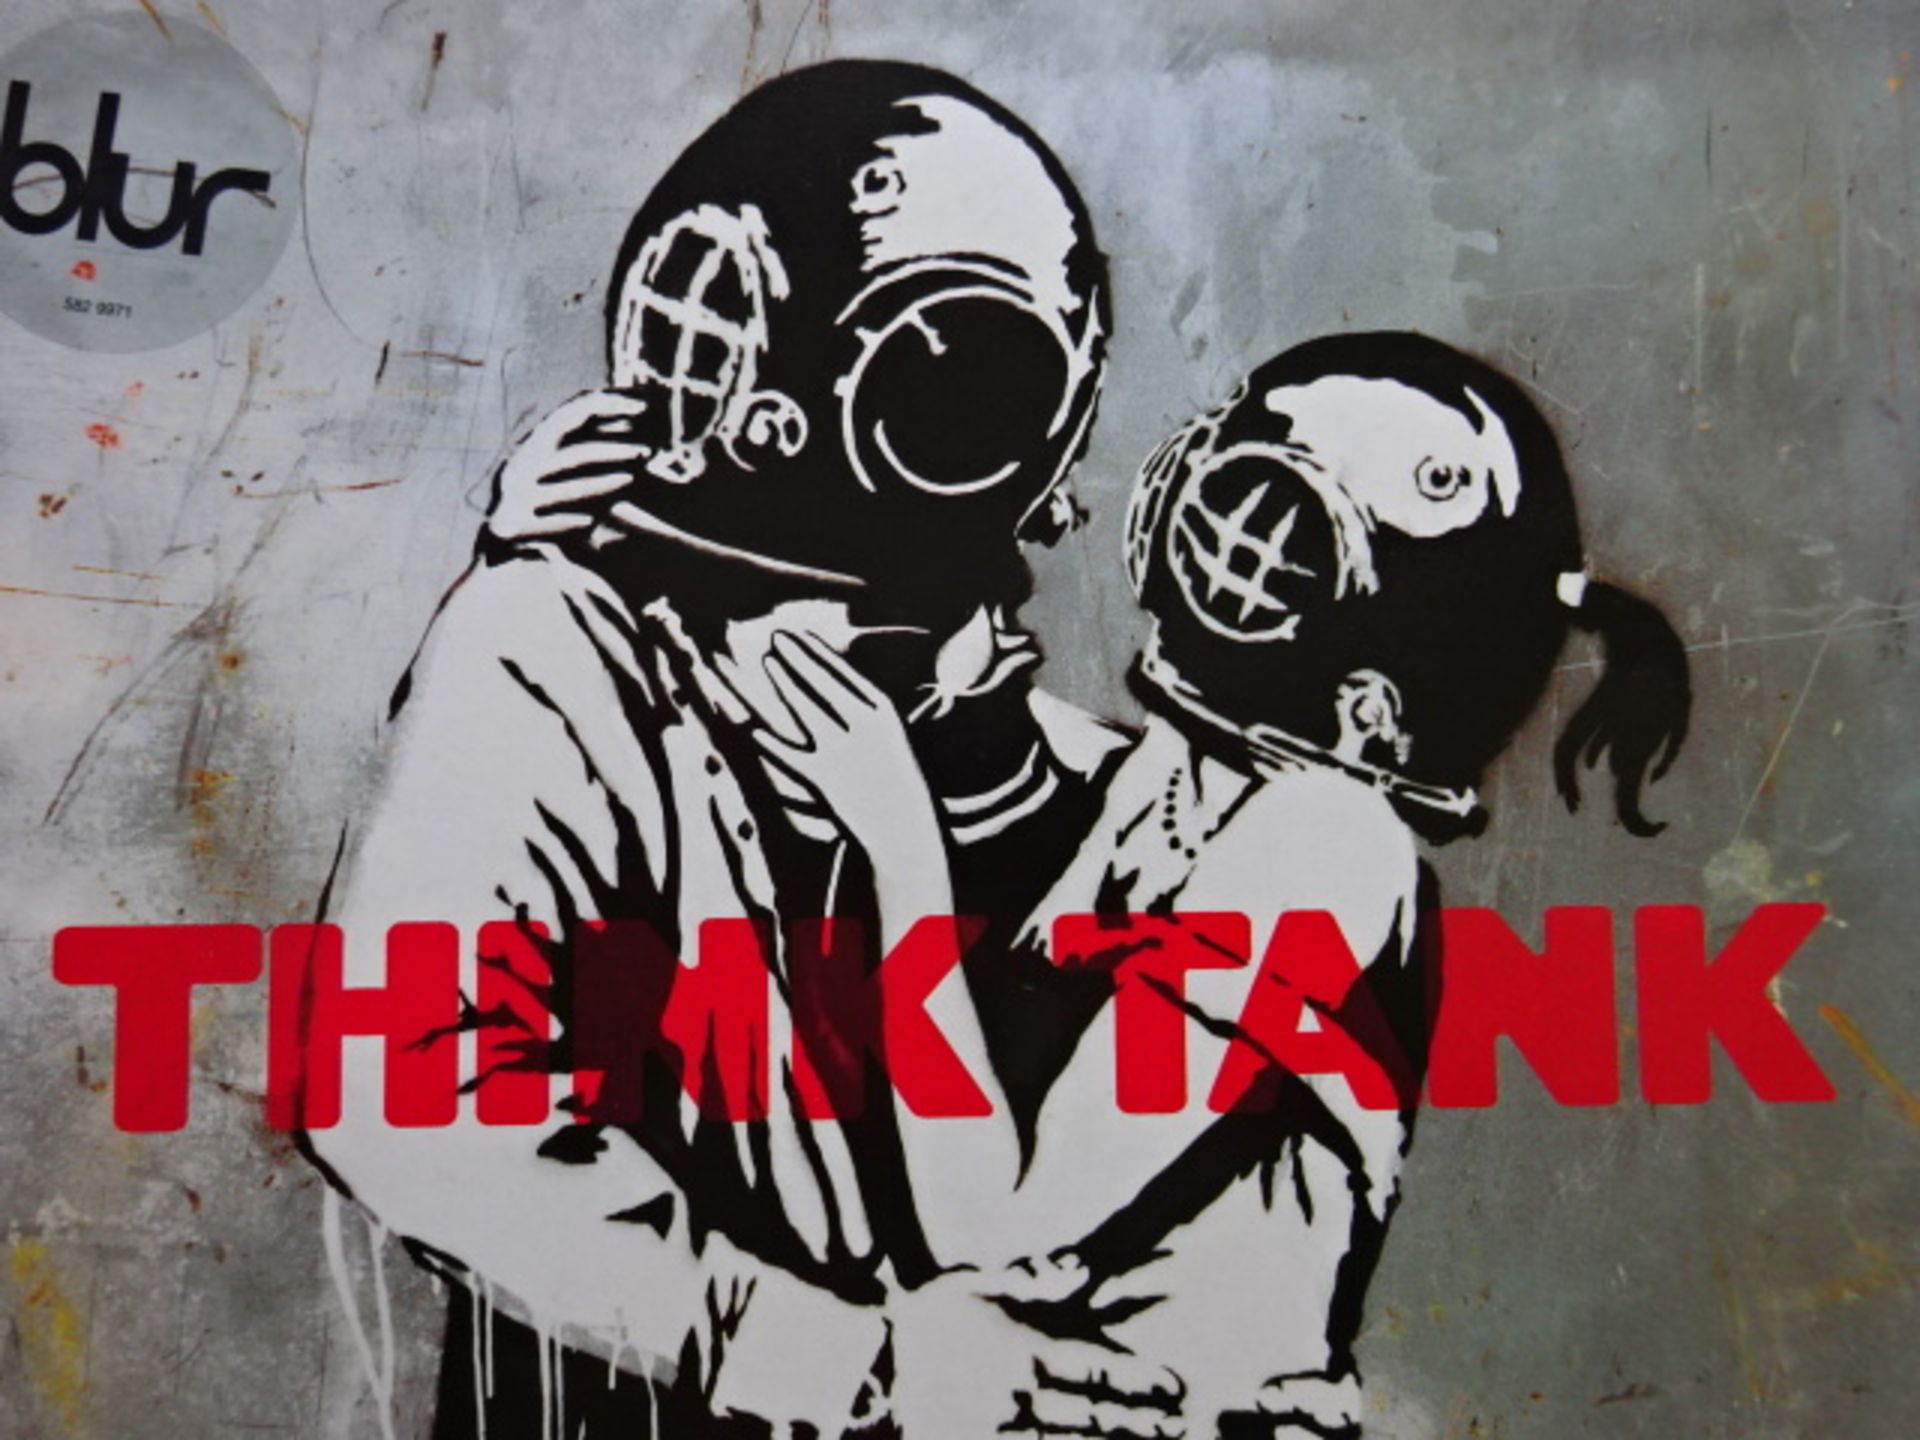 Banksy - Blur Think Tank Vinyl